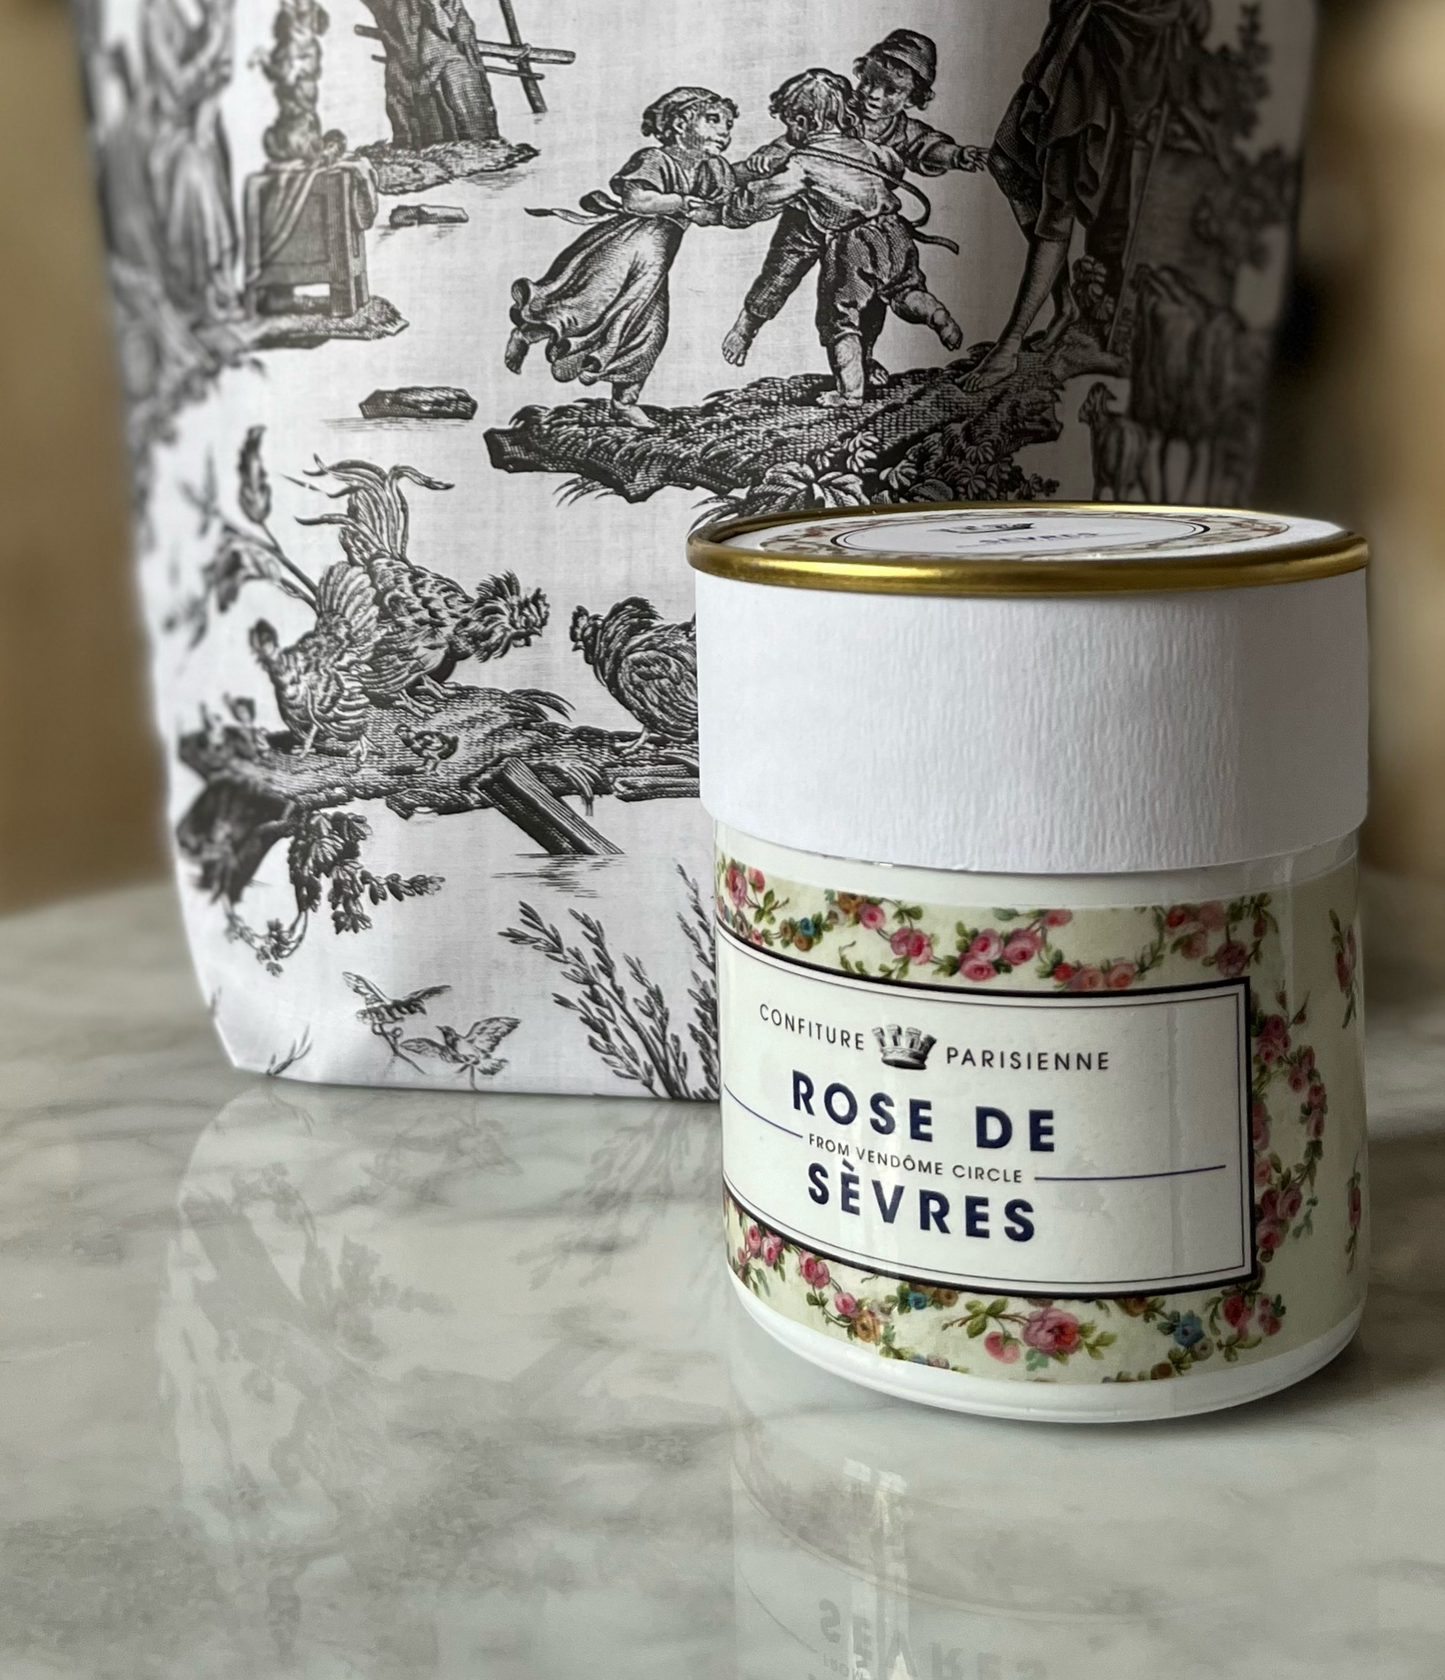 Tea by Vendôme Circle